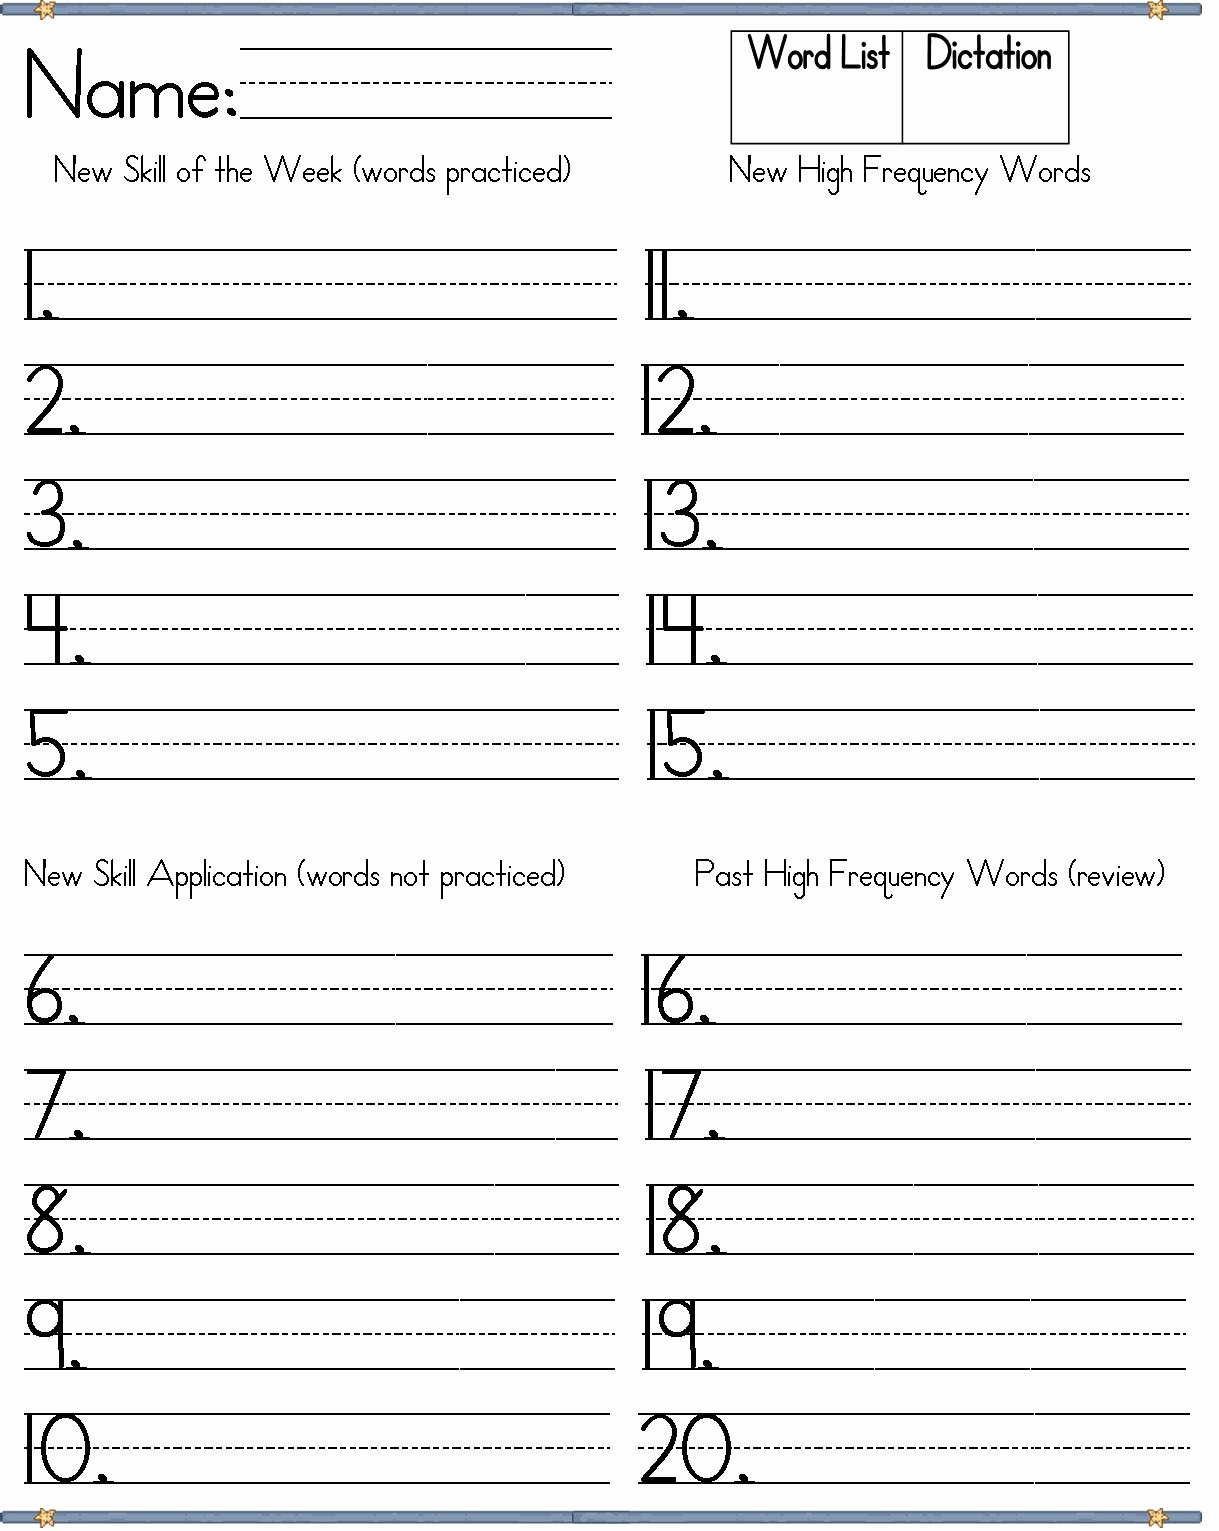 Spelling Test Template 15 Words Fresh Rockin Teacher Materials Spelling Lists that Make Sense